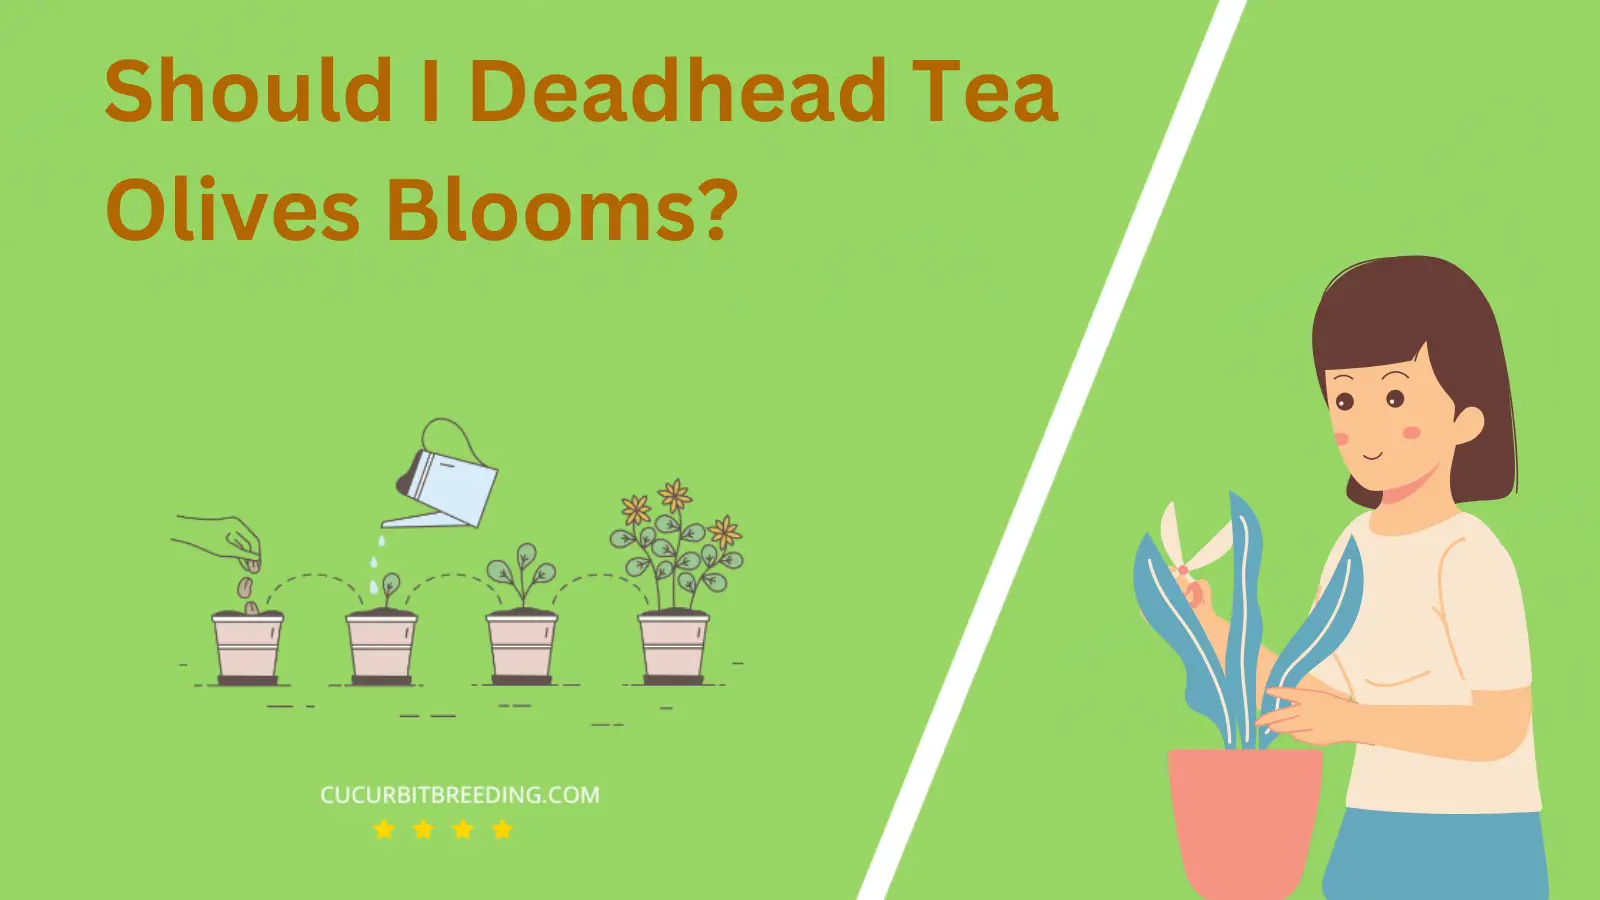 Should I Deadhead Tea Olives Blooms?